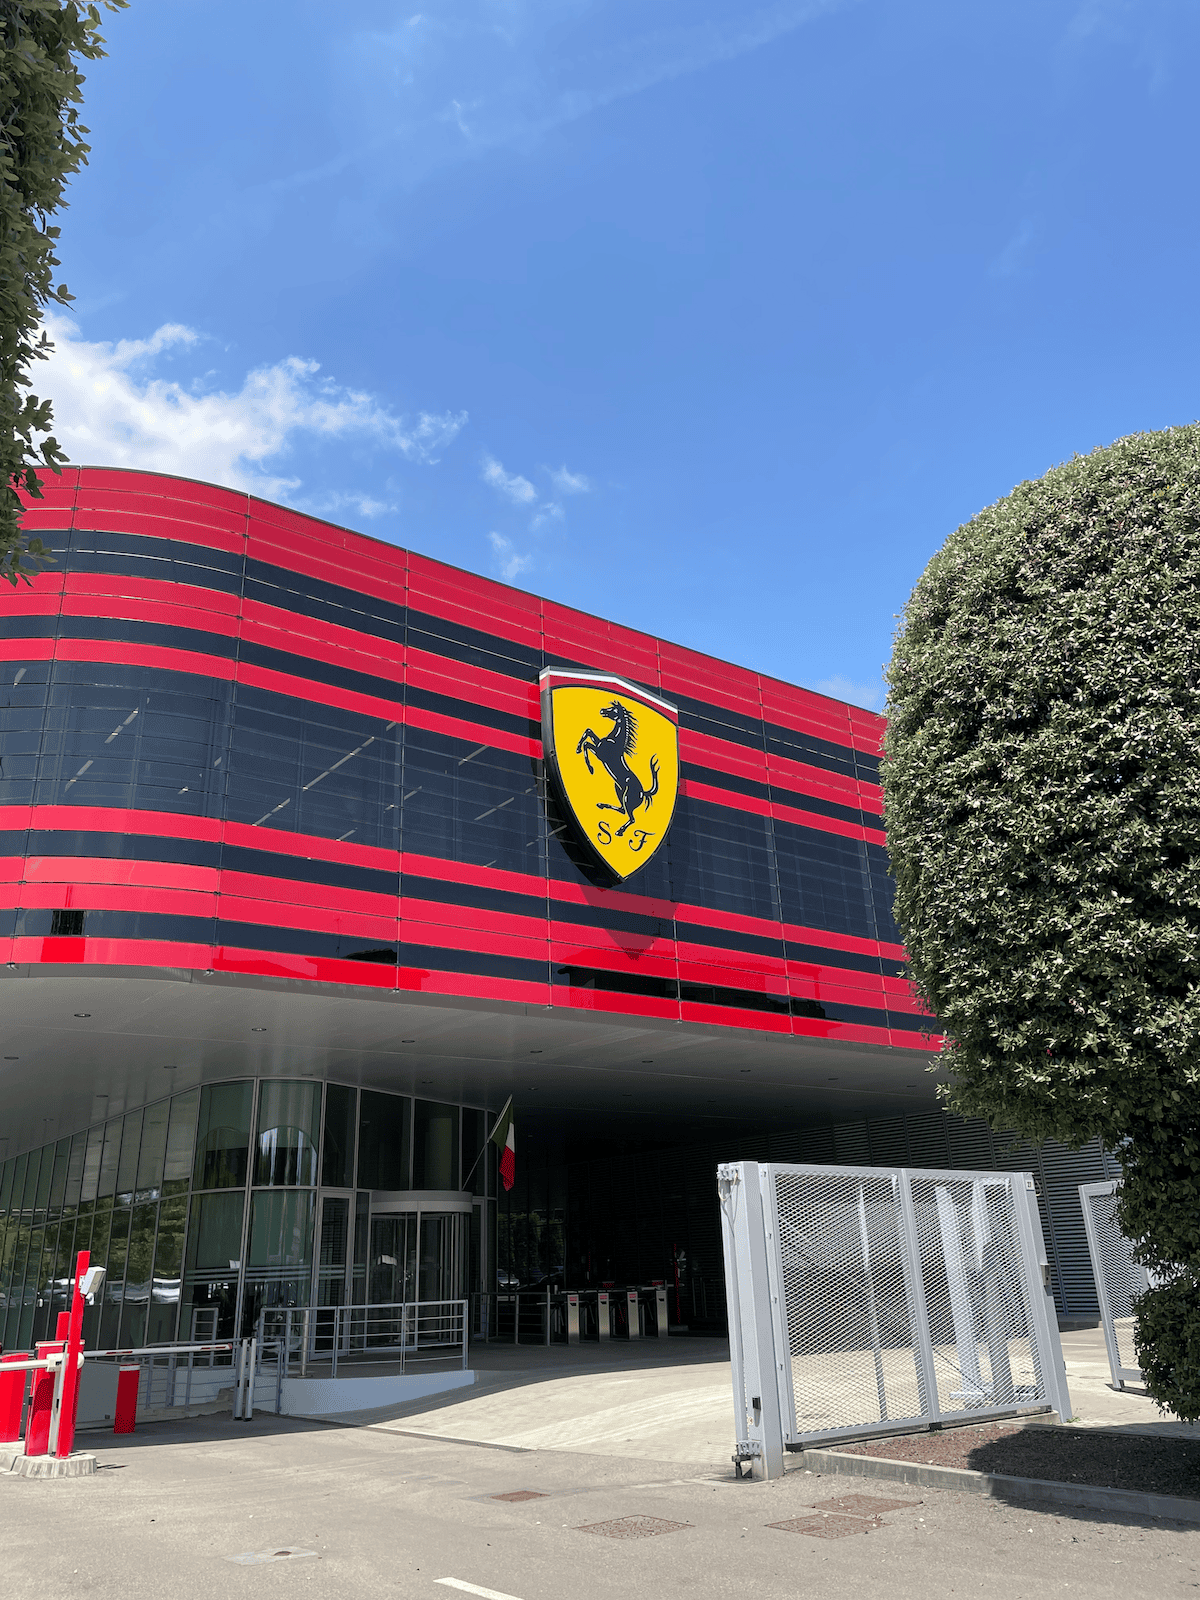 The Scuderia Ferrari building